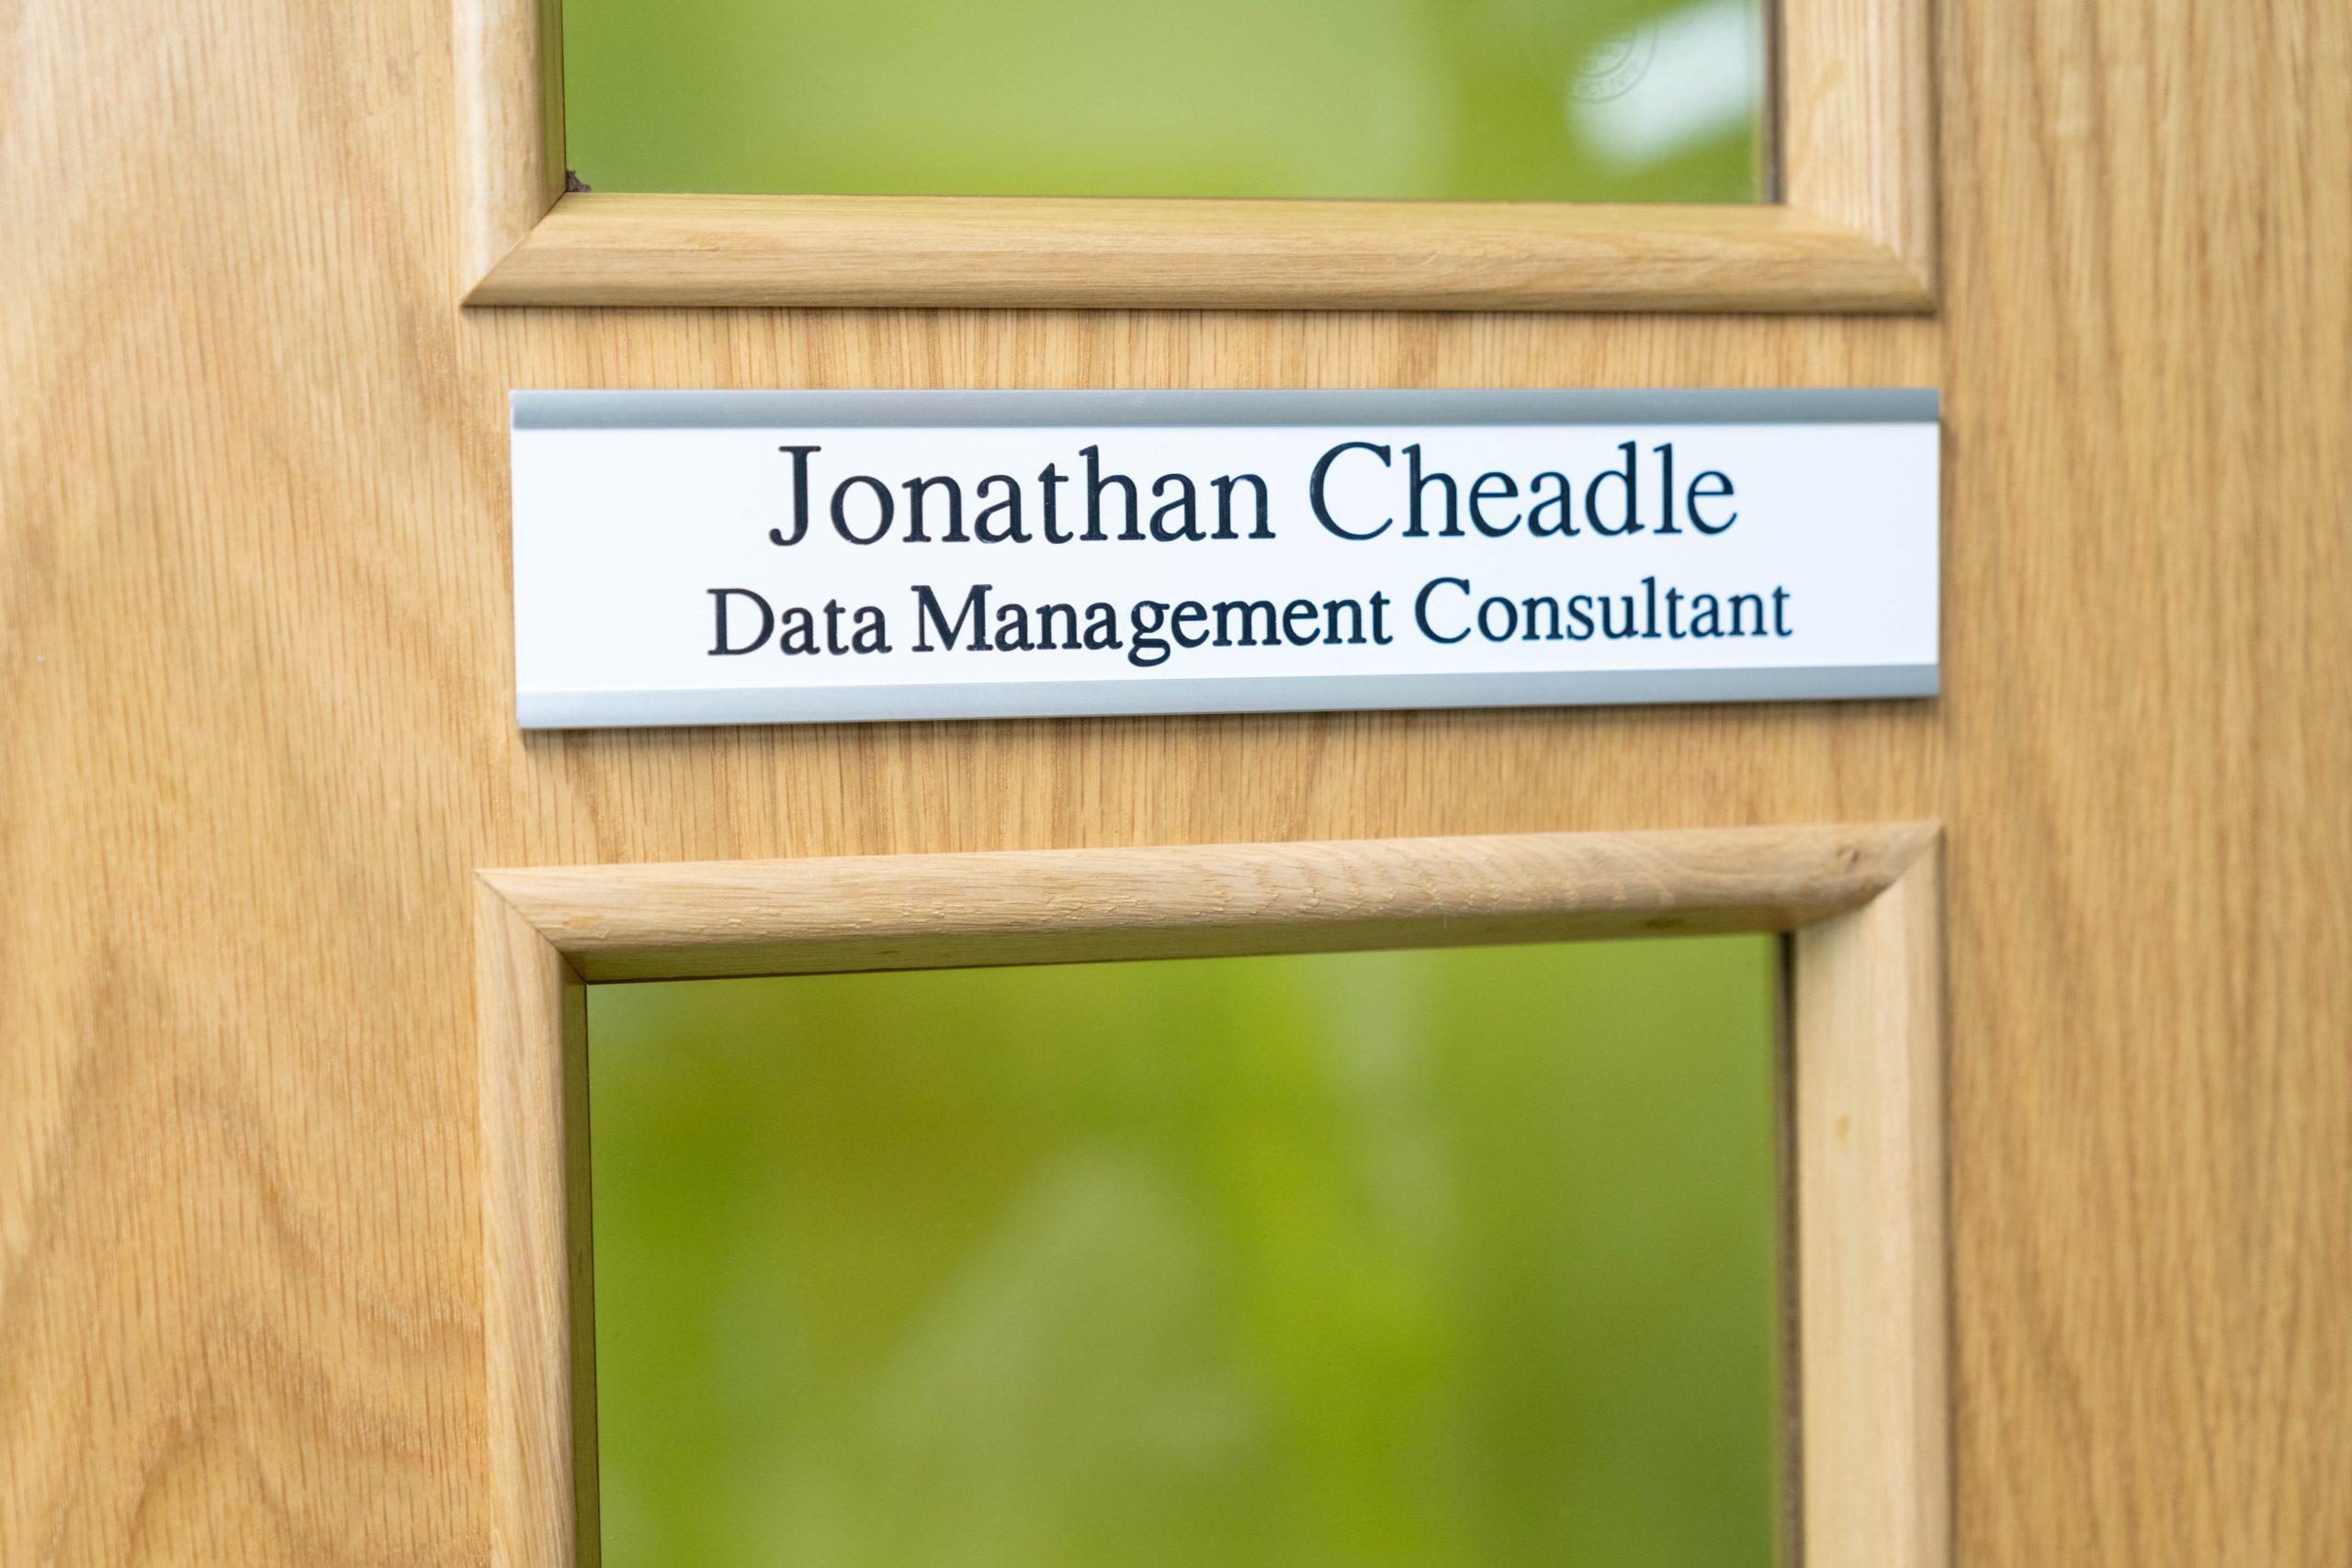 10-inch by 2-inch Interchangeable Office Door Sign in Aluminum Holder